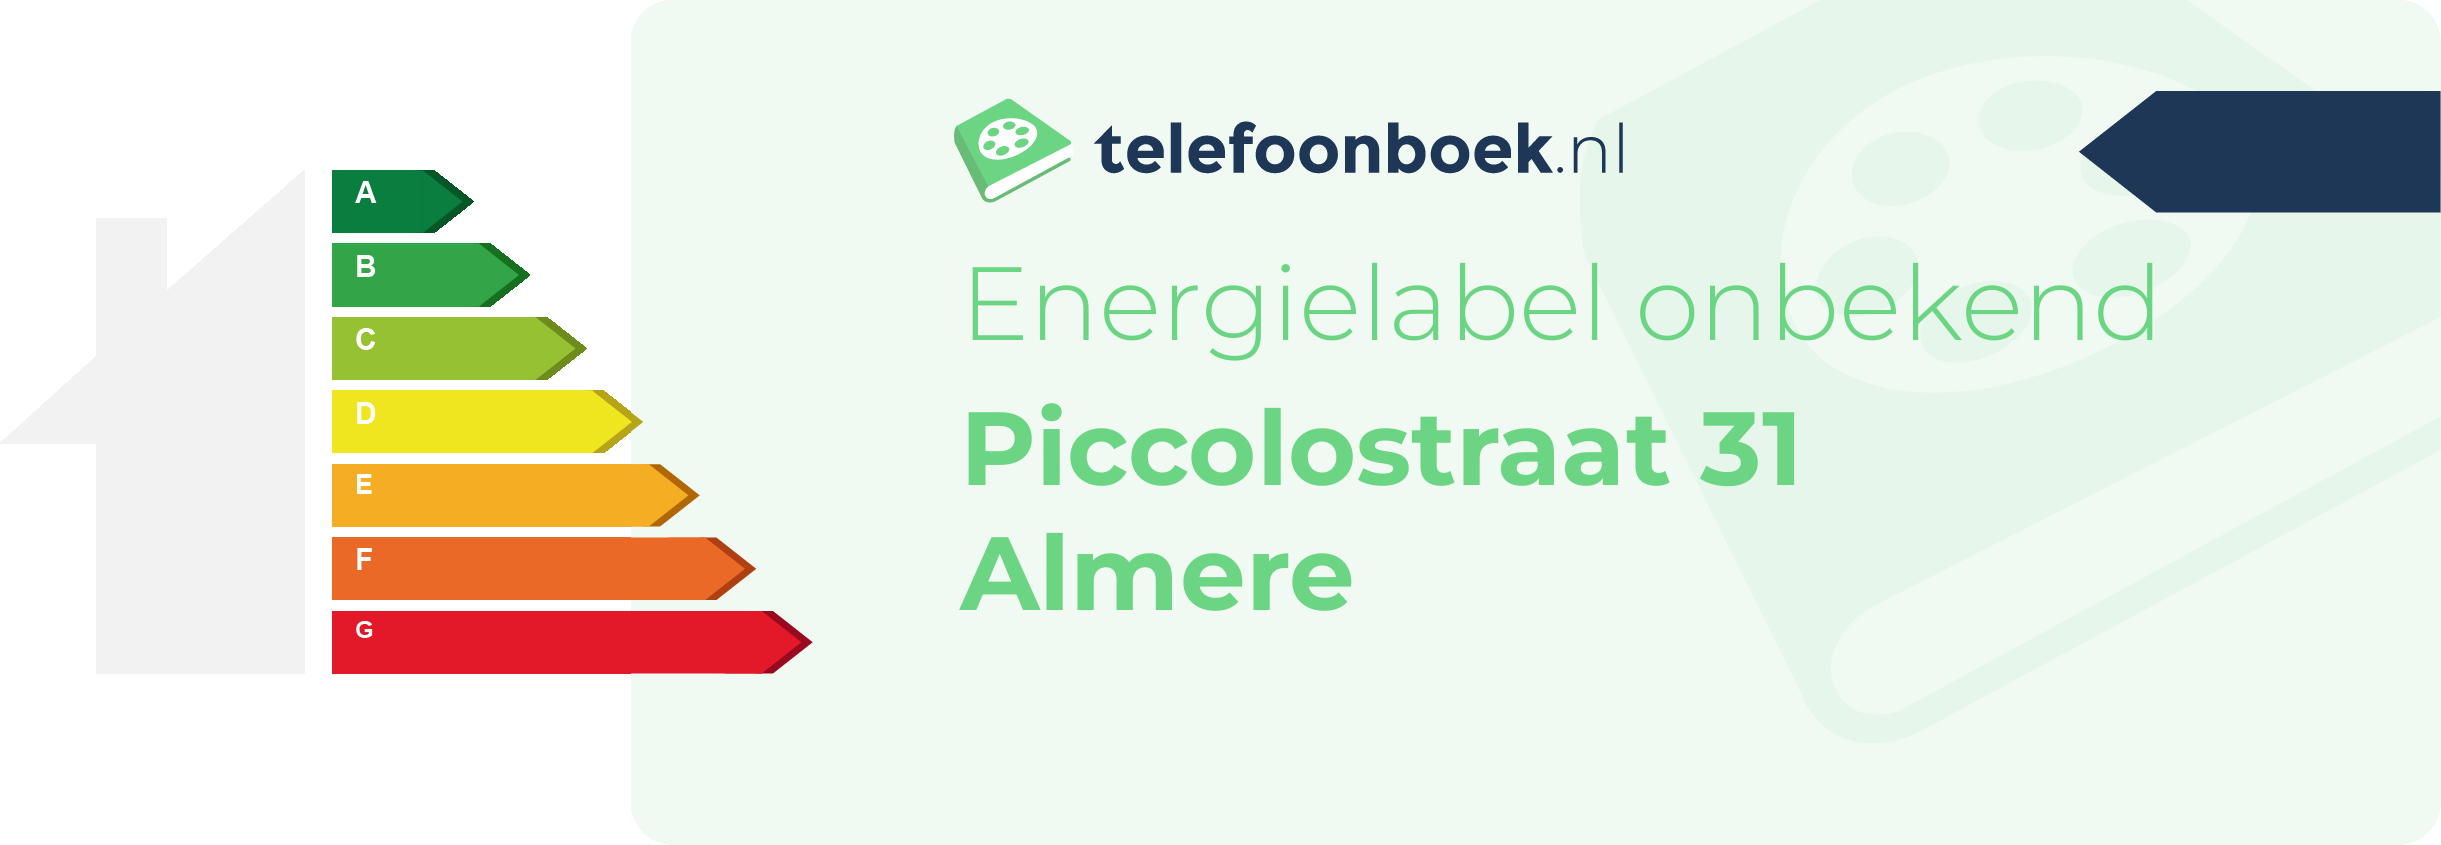 Energielabel Piccolostraat 31 Almere